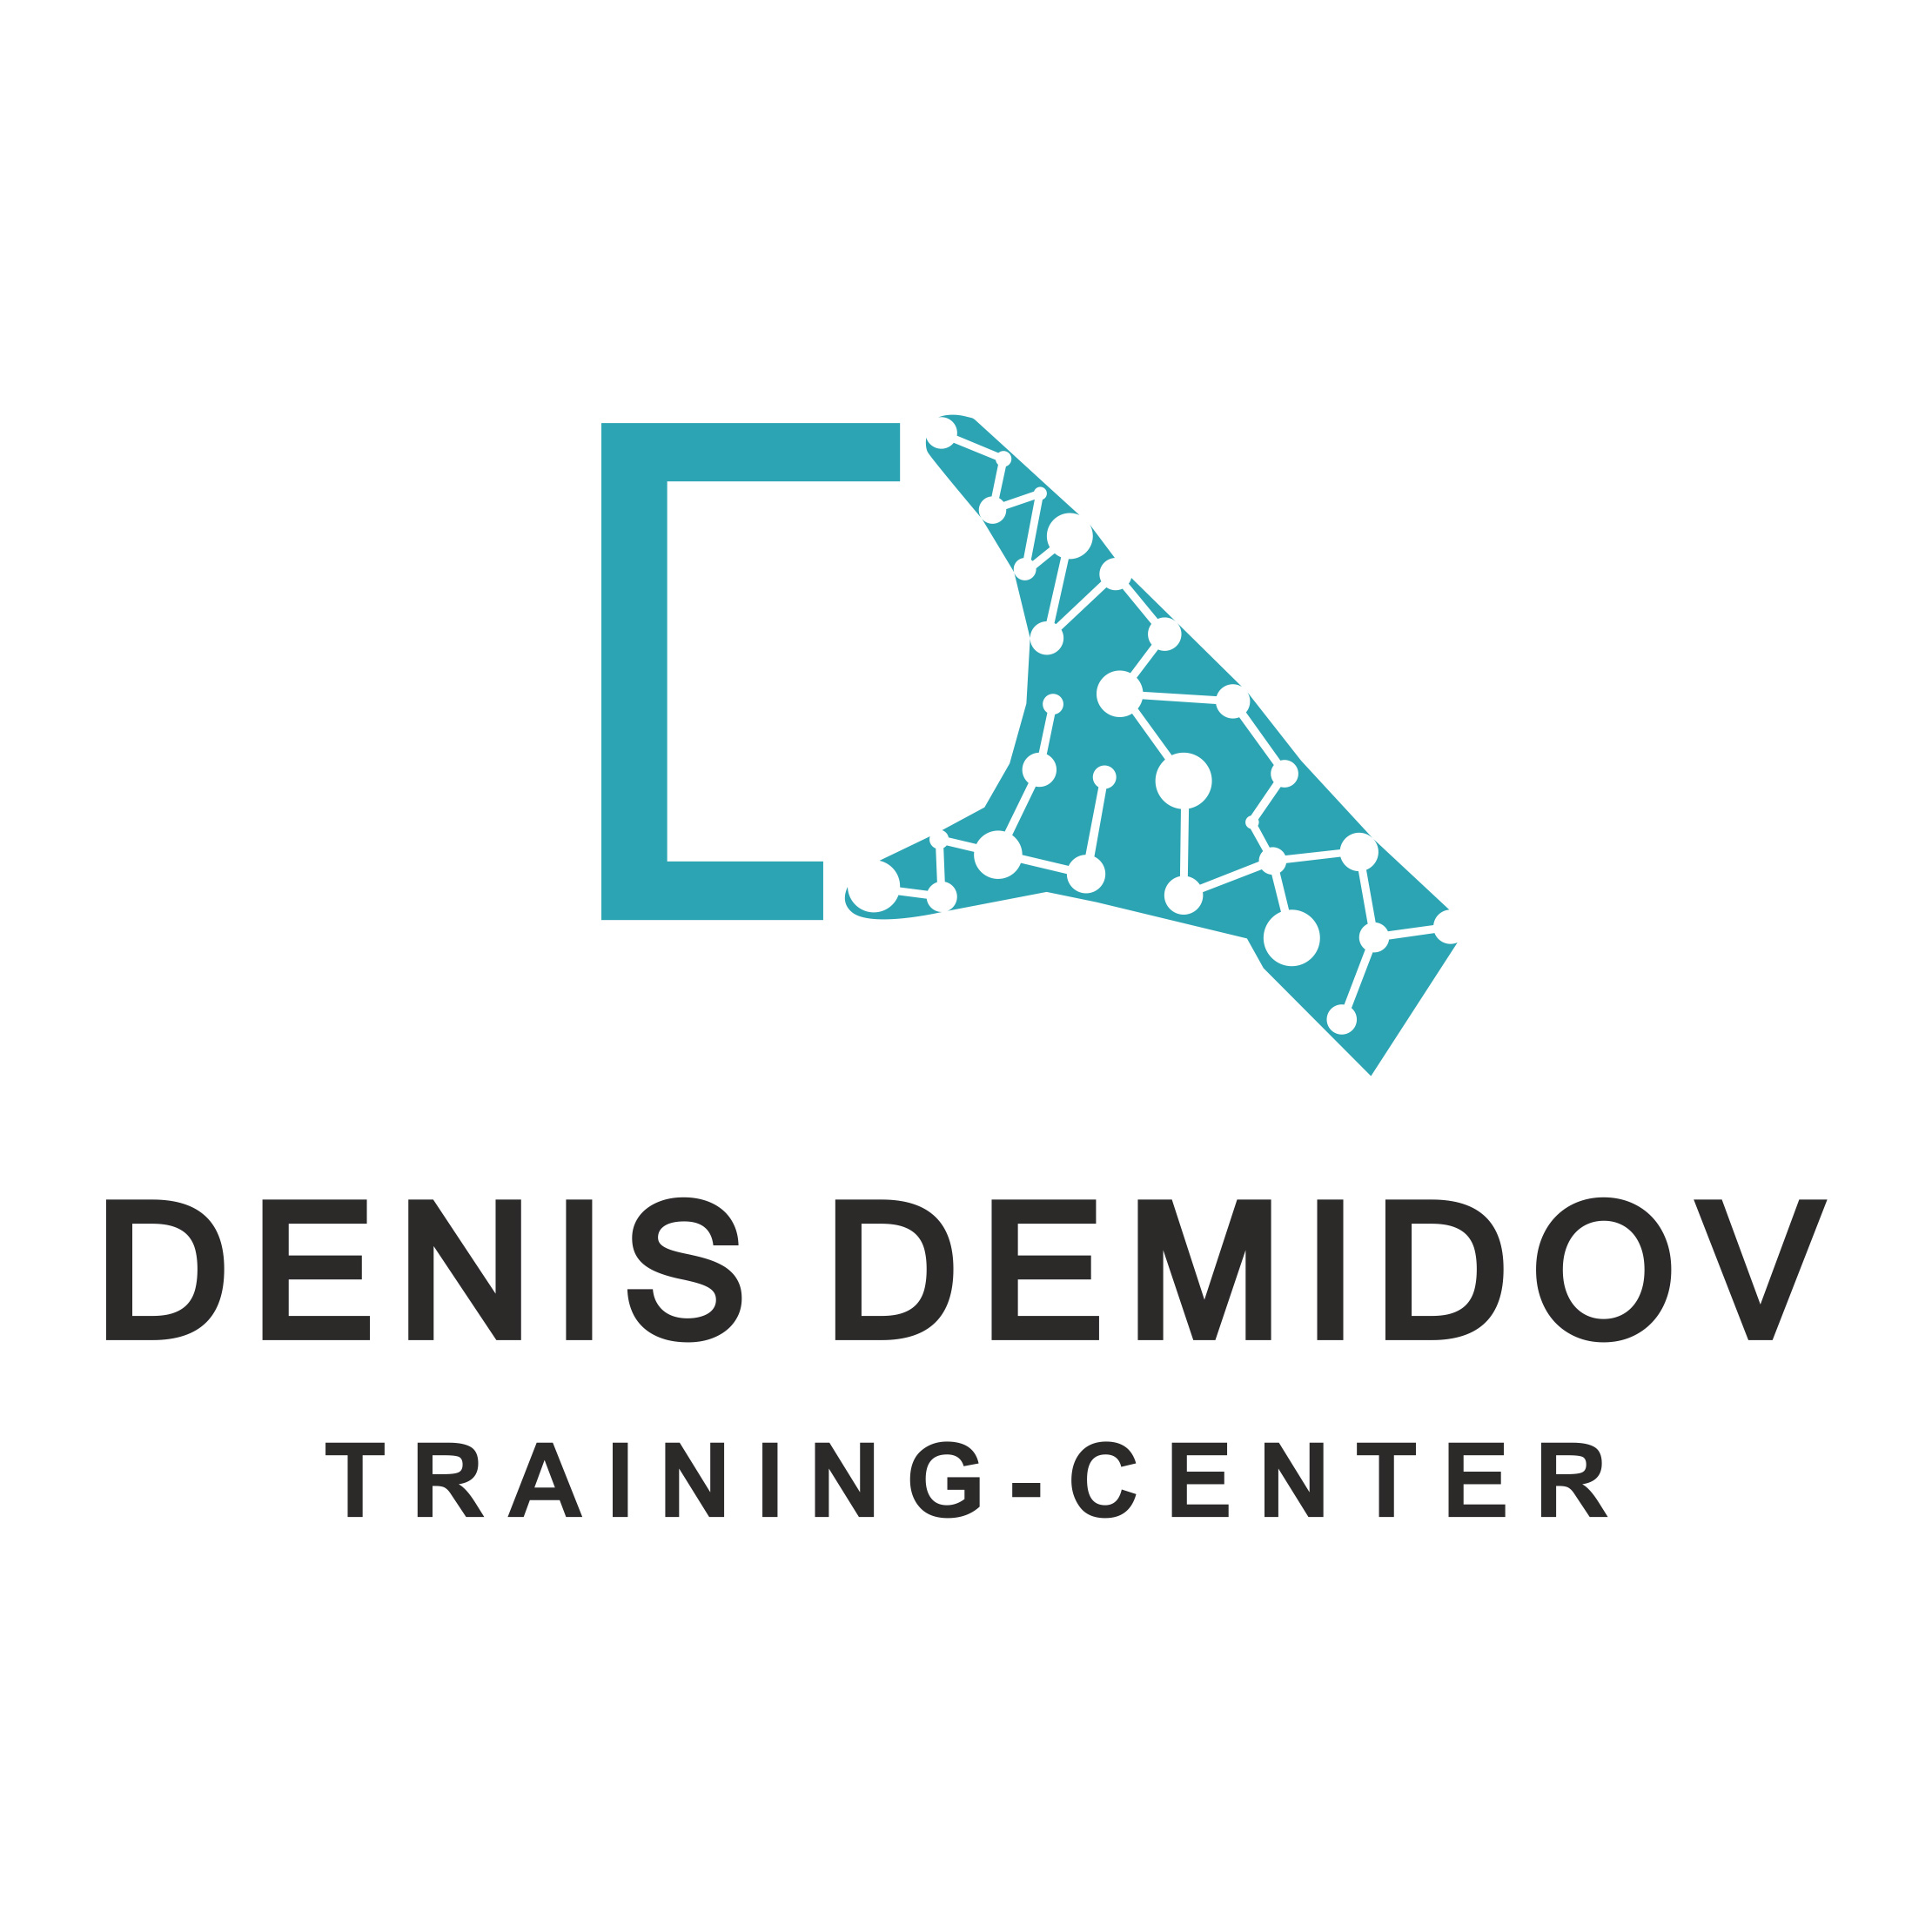 Denis Demidov traning-center